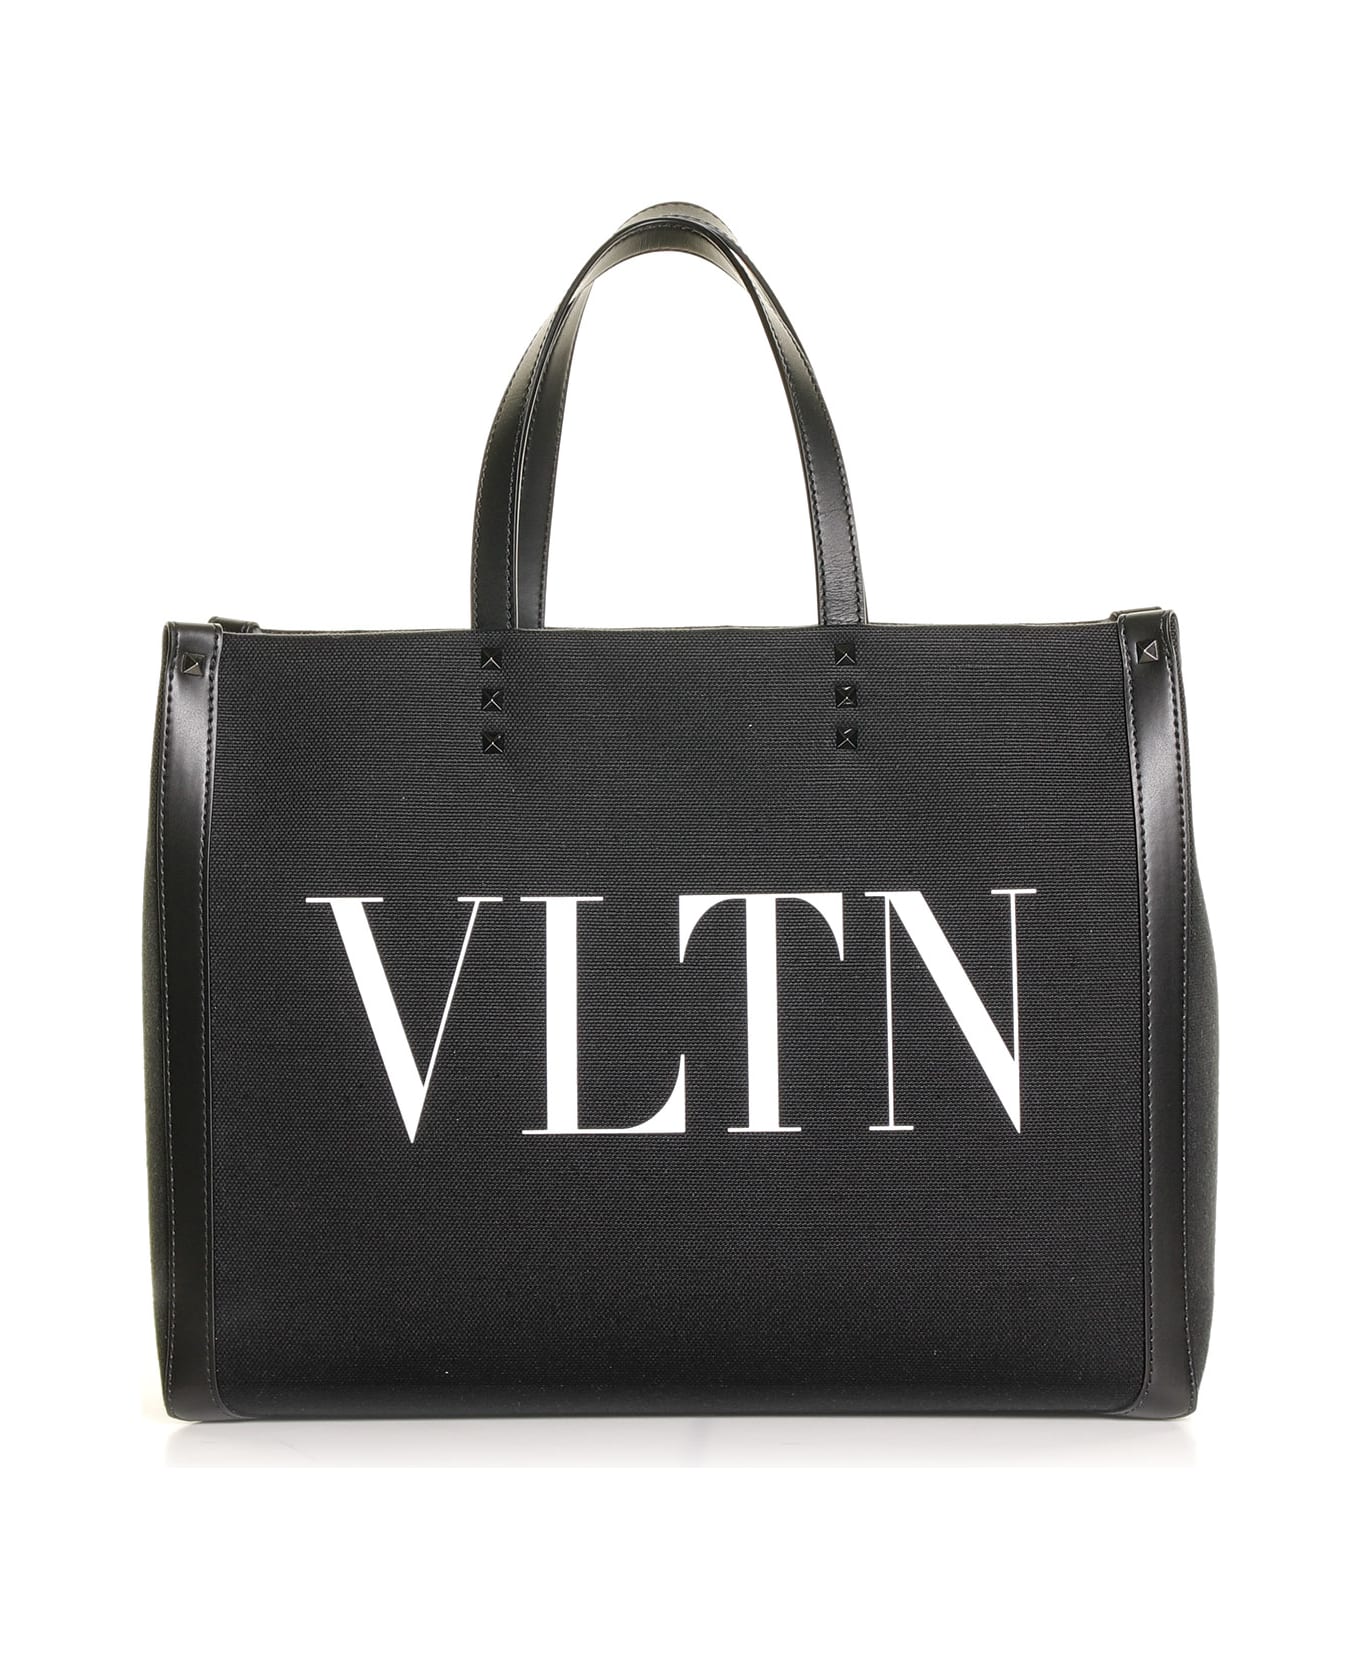 Valentino Garavani Canvas Shopping Bag With Logo - NERO BIANCO